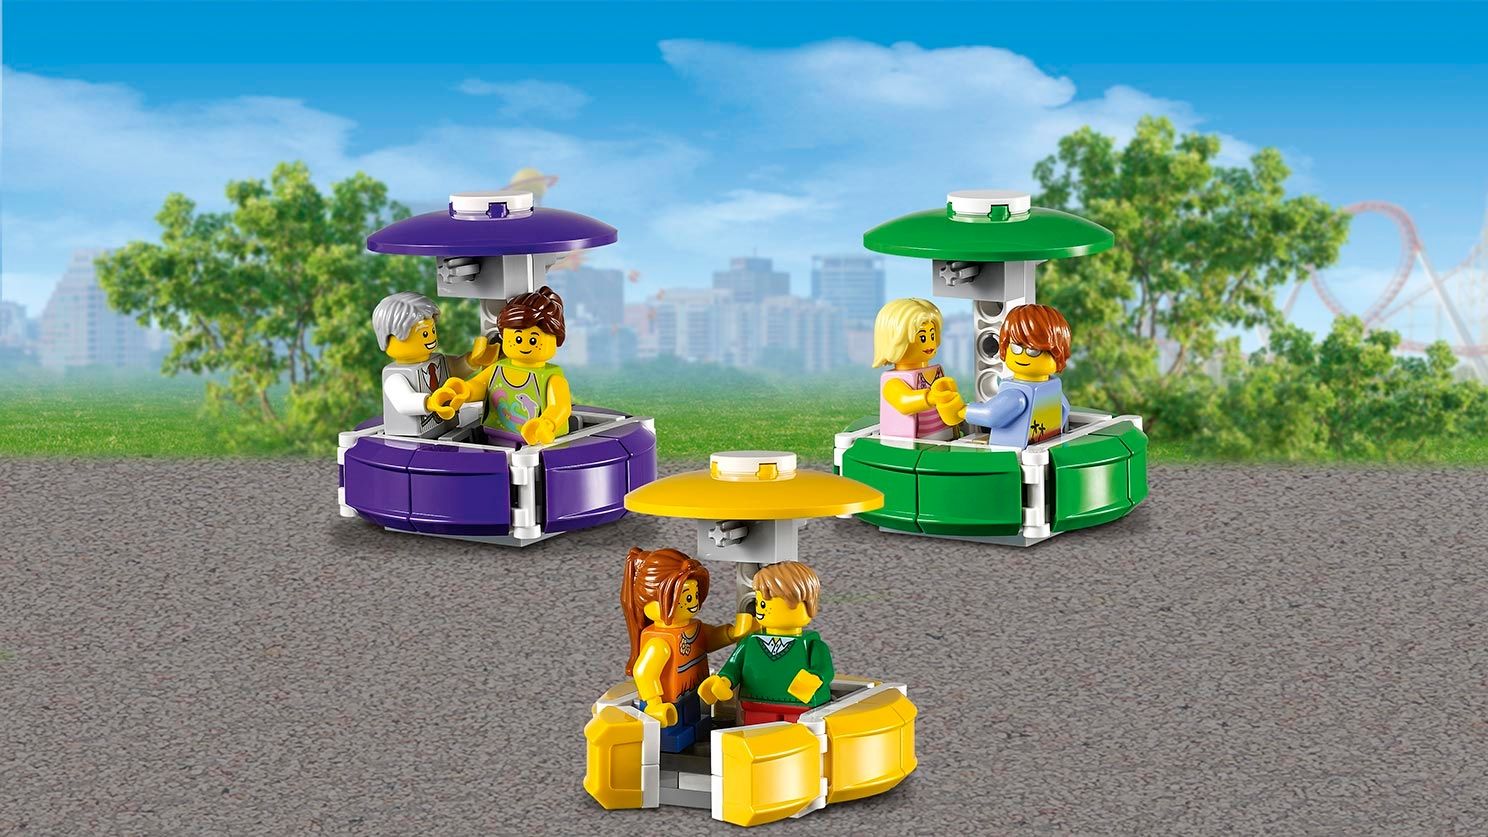 LEGO Advanced Models 10247 Riesenrad (Ferris Wheel) LEGO_10247_PROD_DET01_1488.jpg